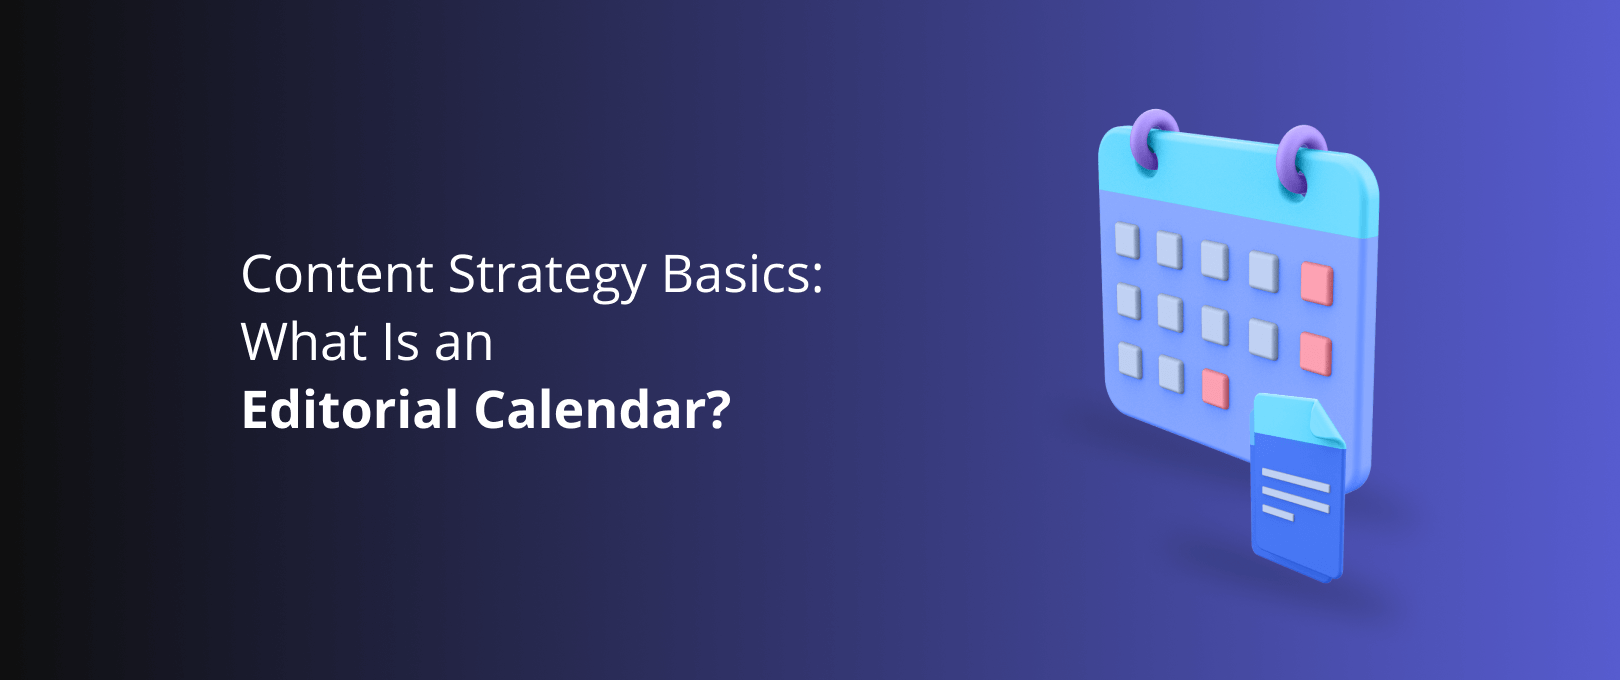 Content Strategy Basics What Is an Editorial Calendar? DevriX